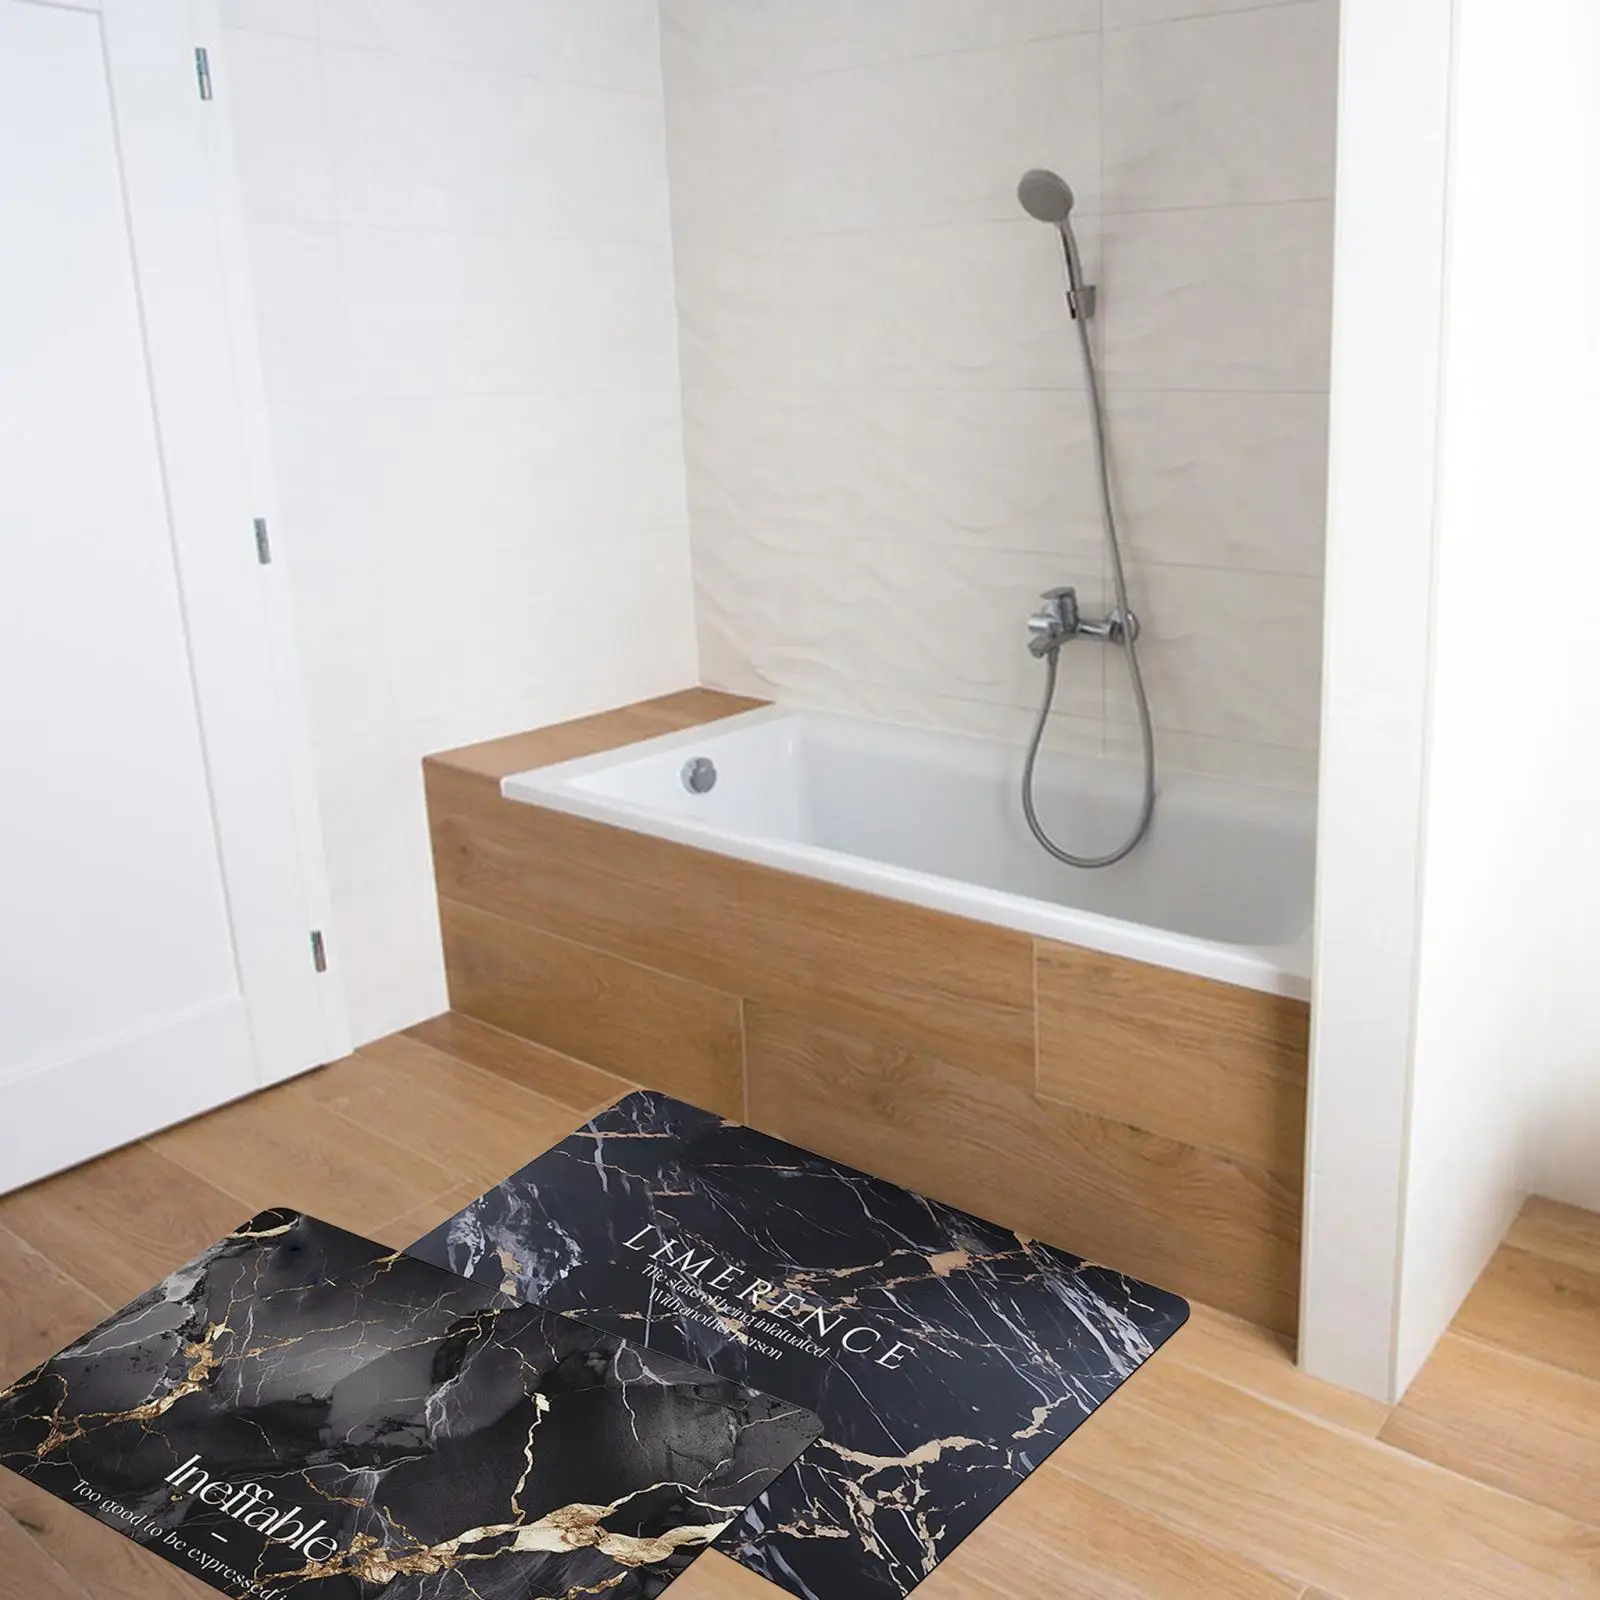 Diatom Mud Bath Mat Absorbent Non Slip Doormat for Hallway Entryway Bathroom